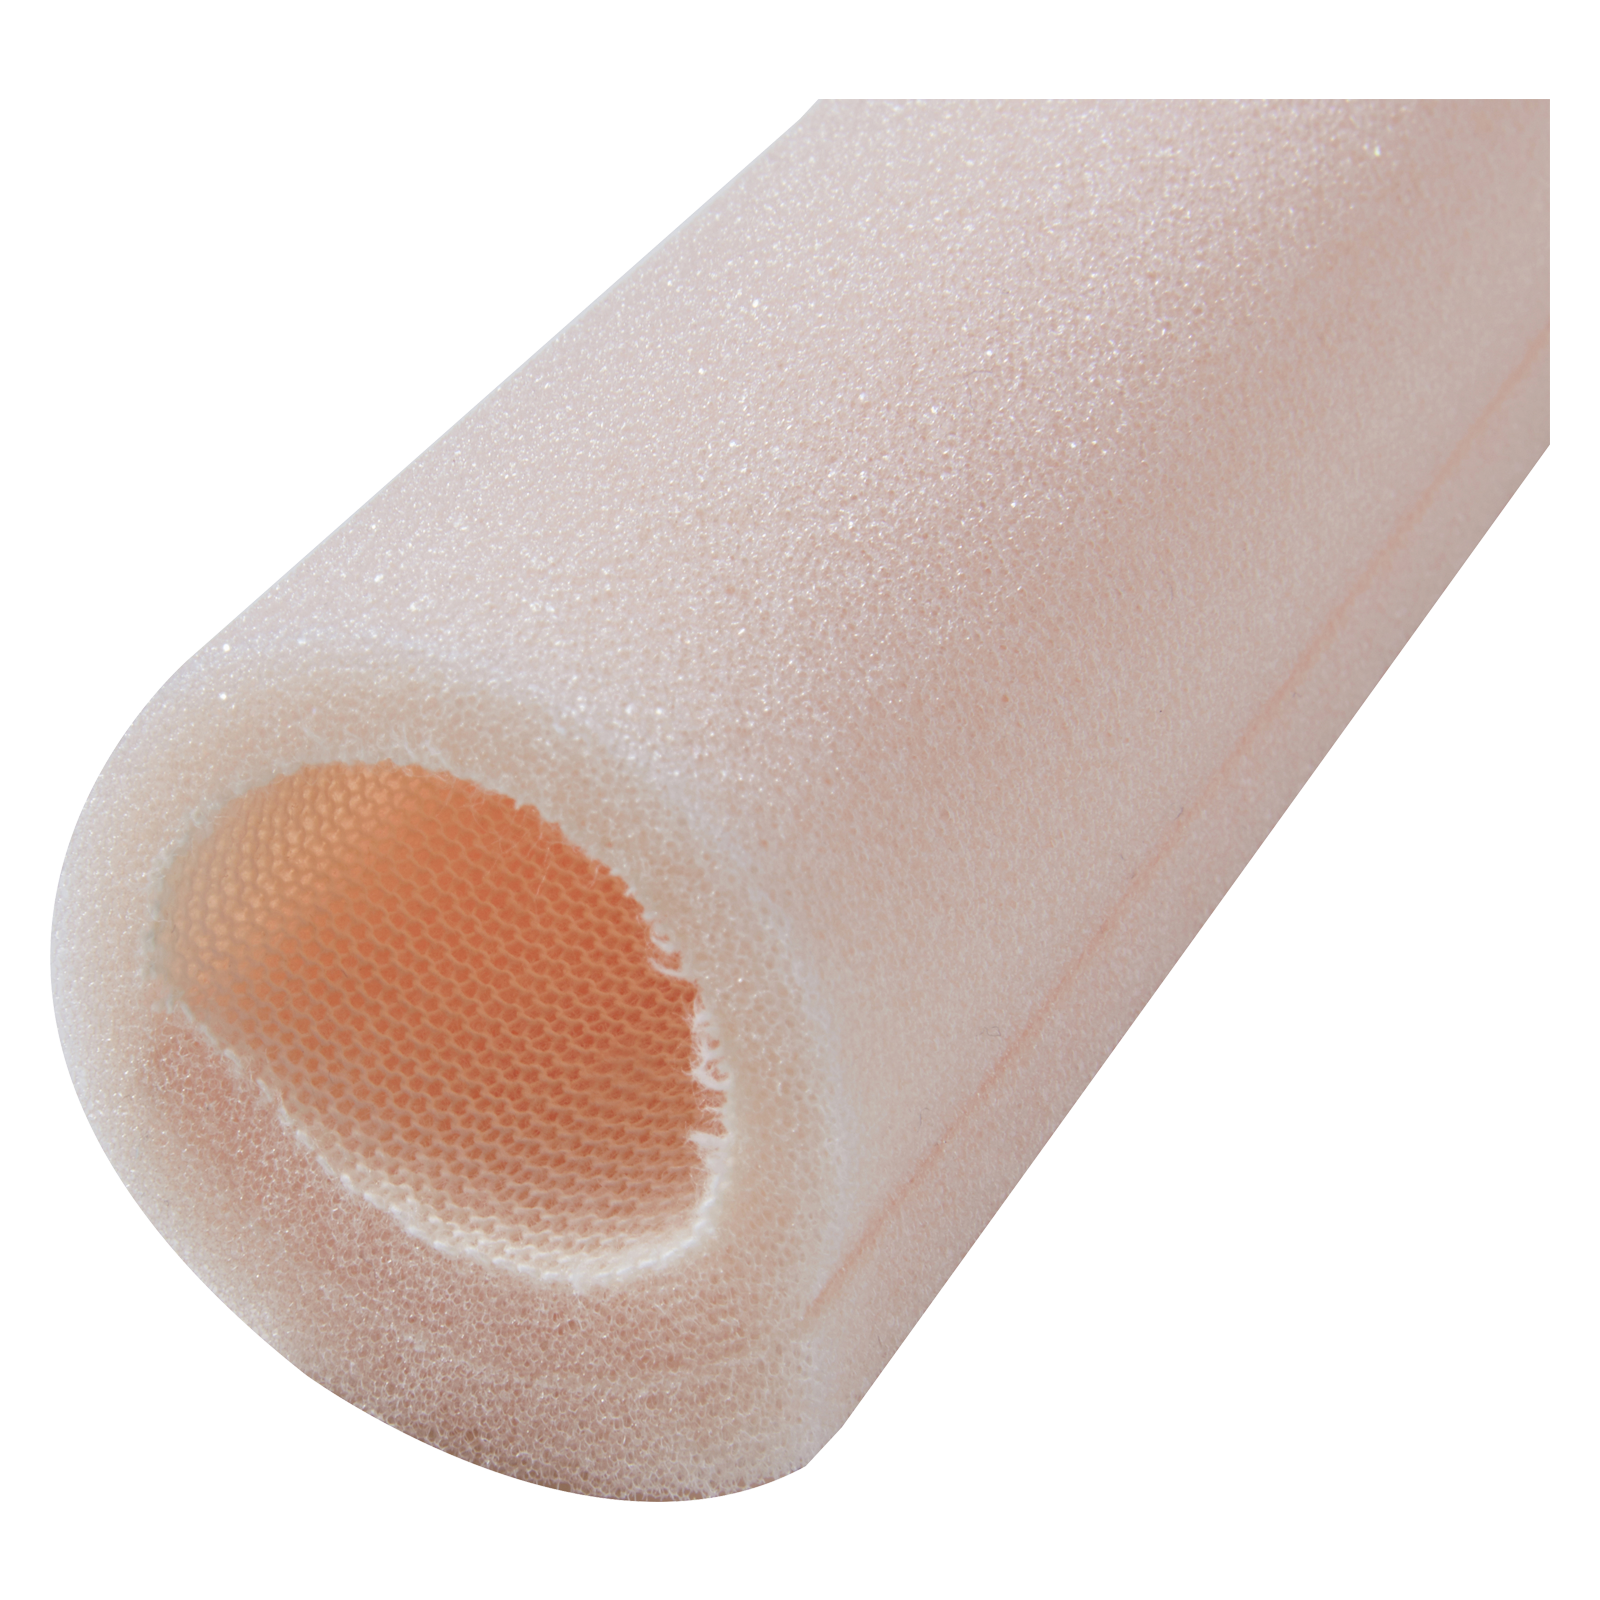 Tubifoam Zehenschutzschlauch, 12 Stück à 25 cm, Gr. 6, Ø 25 mm, überlappend